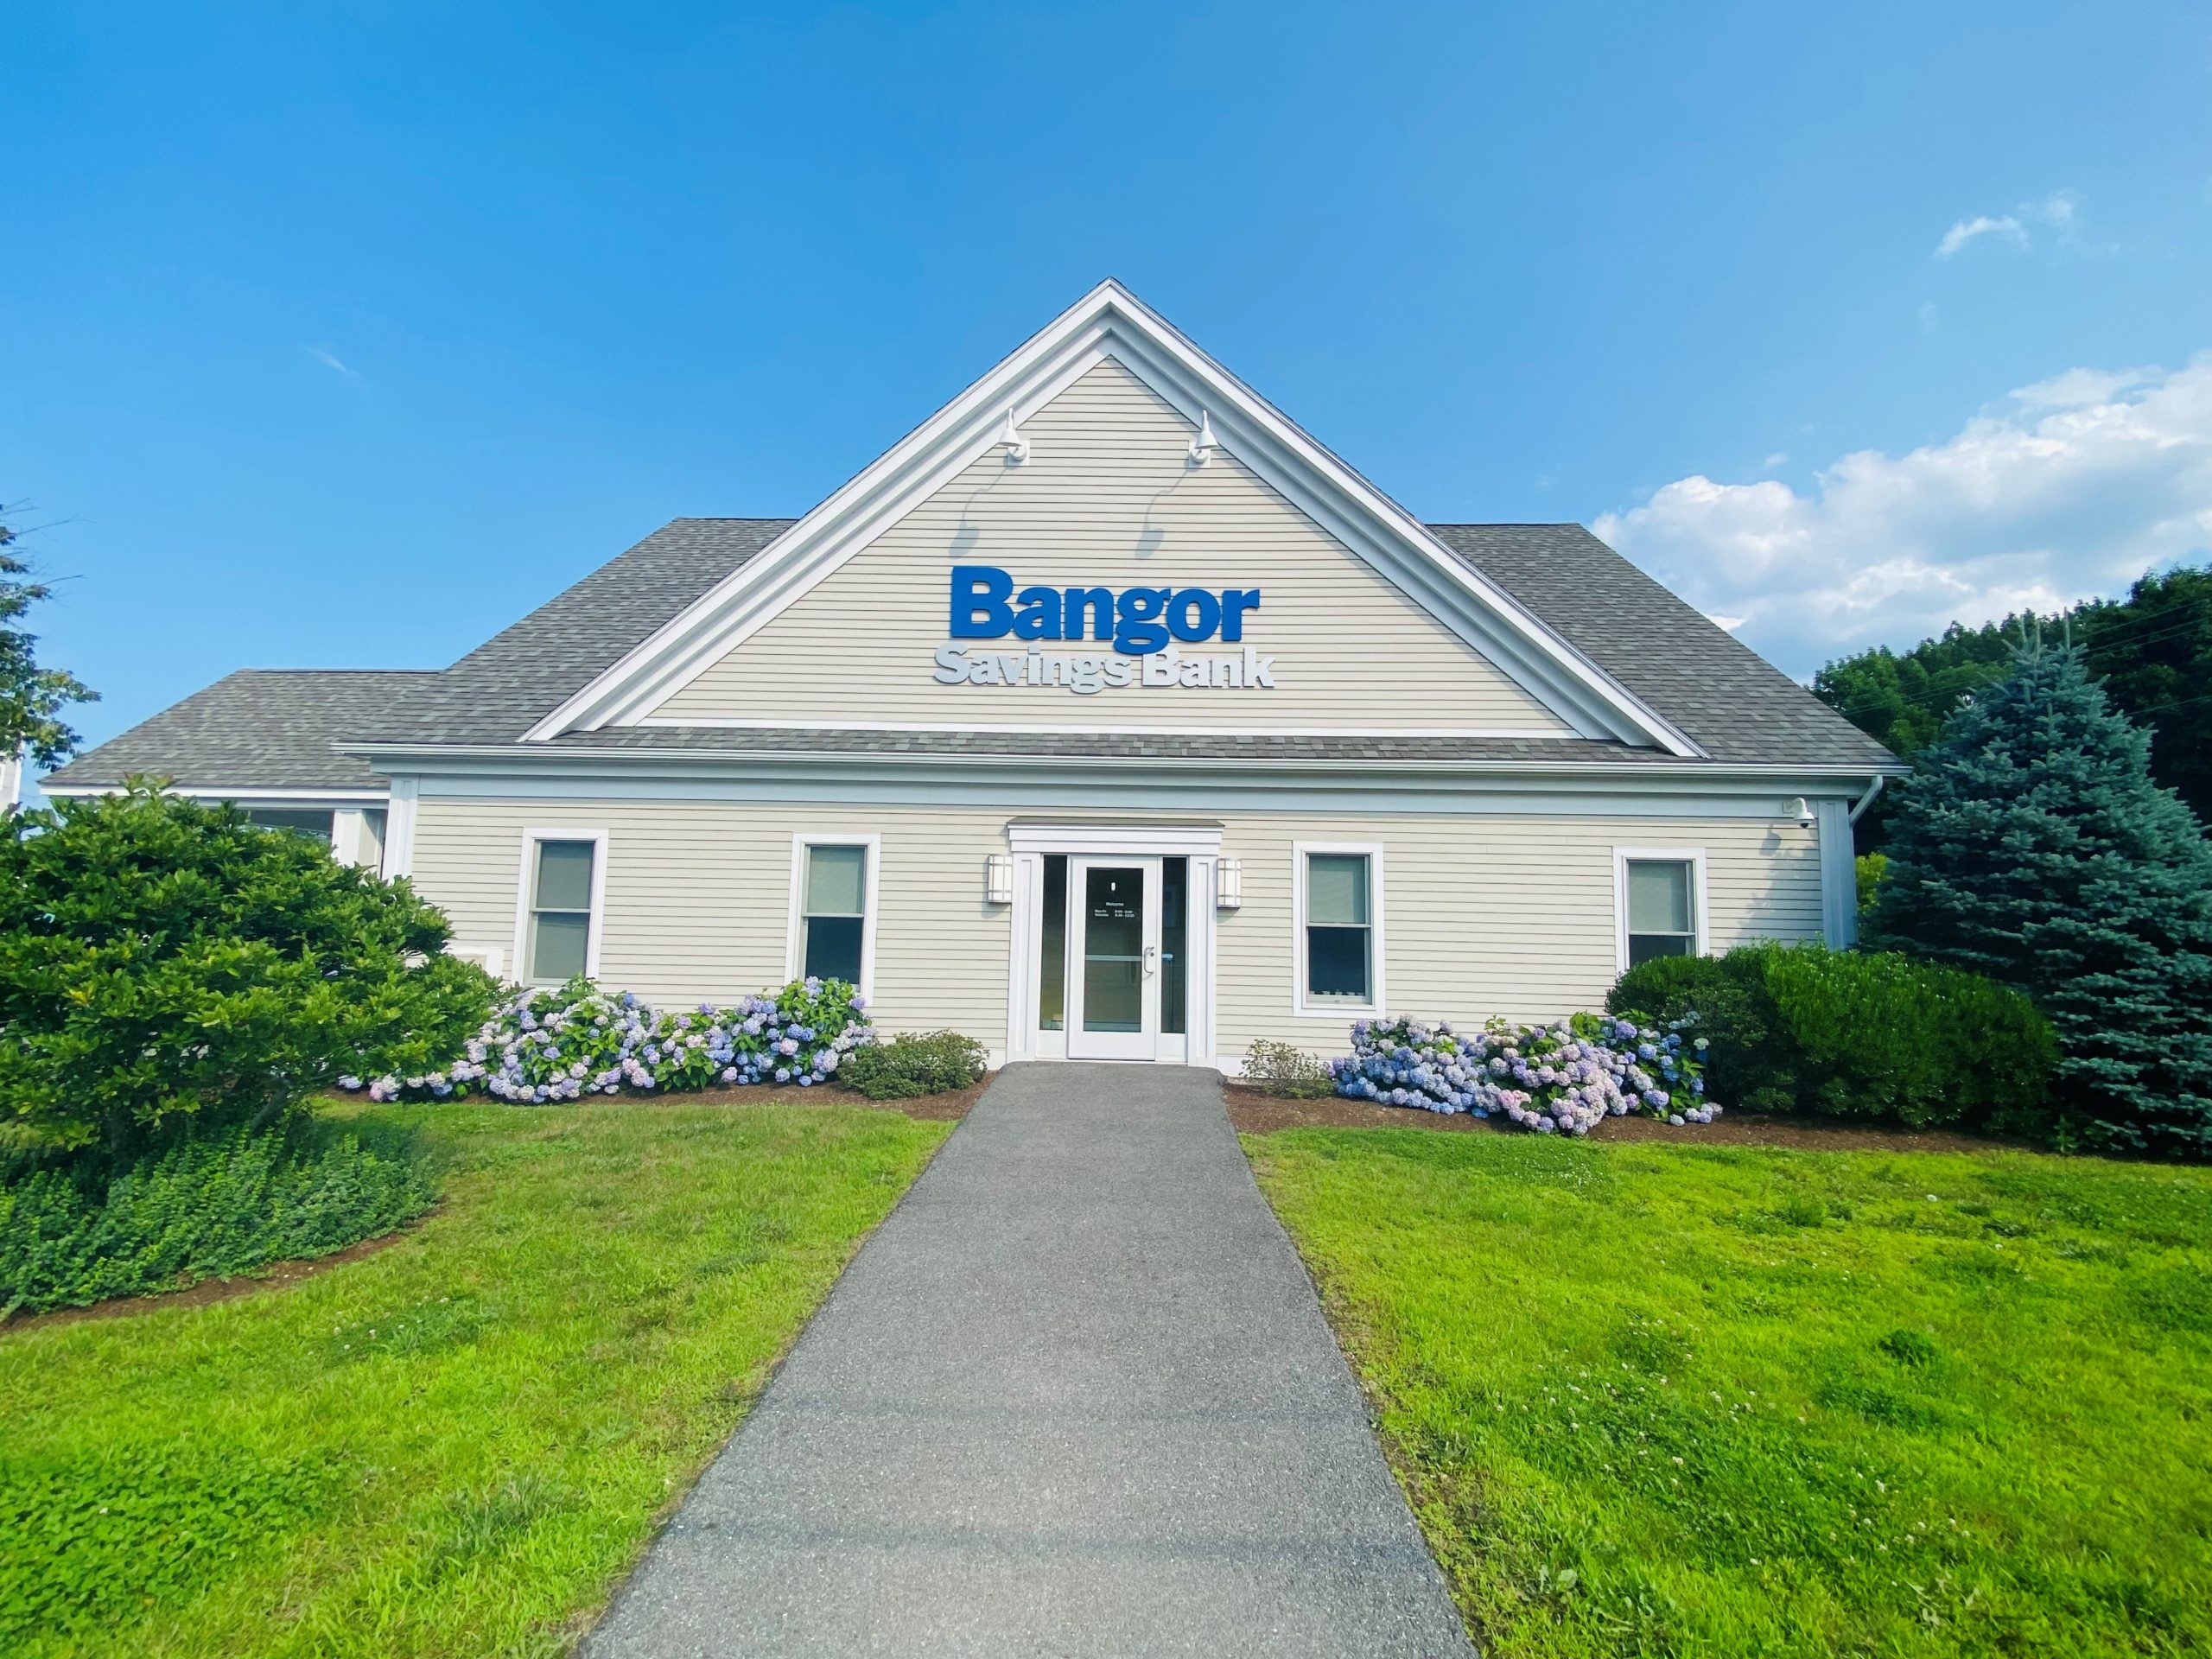 Bangor Savings Bank - Rockland - Penobscot Bay Regional ...